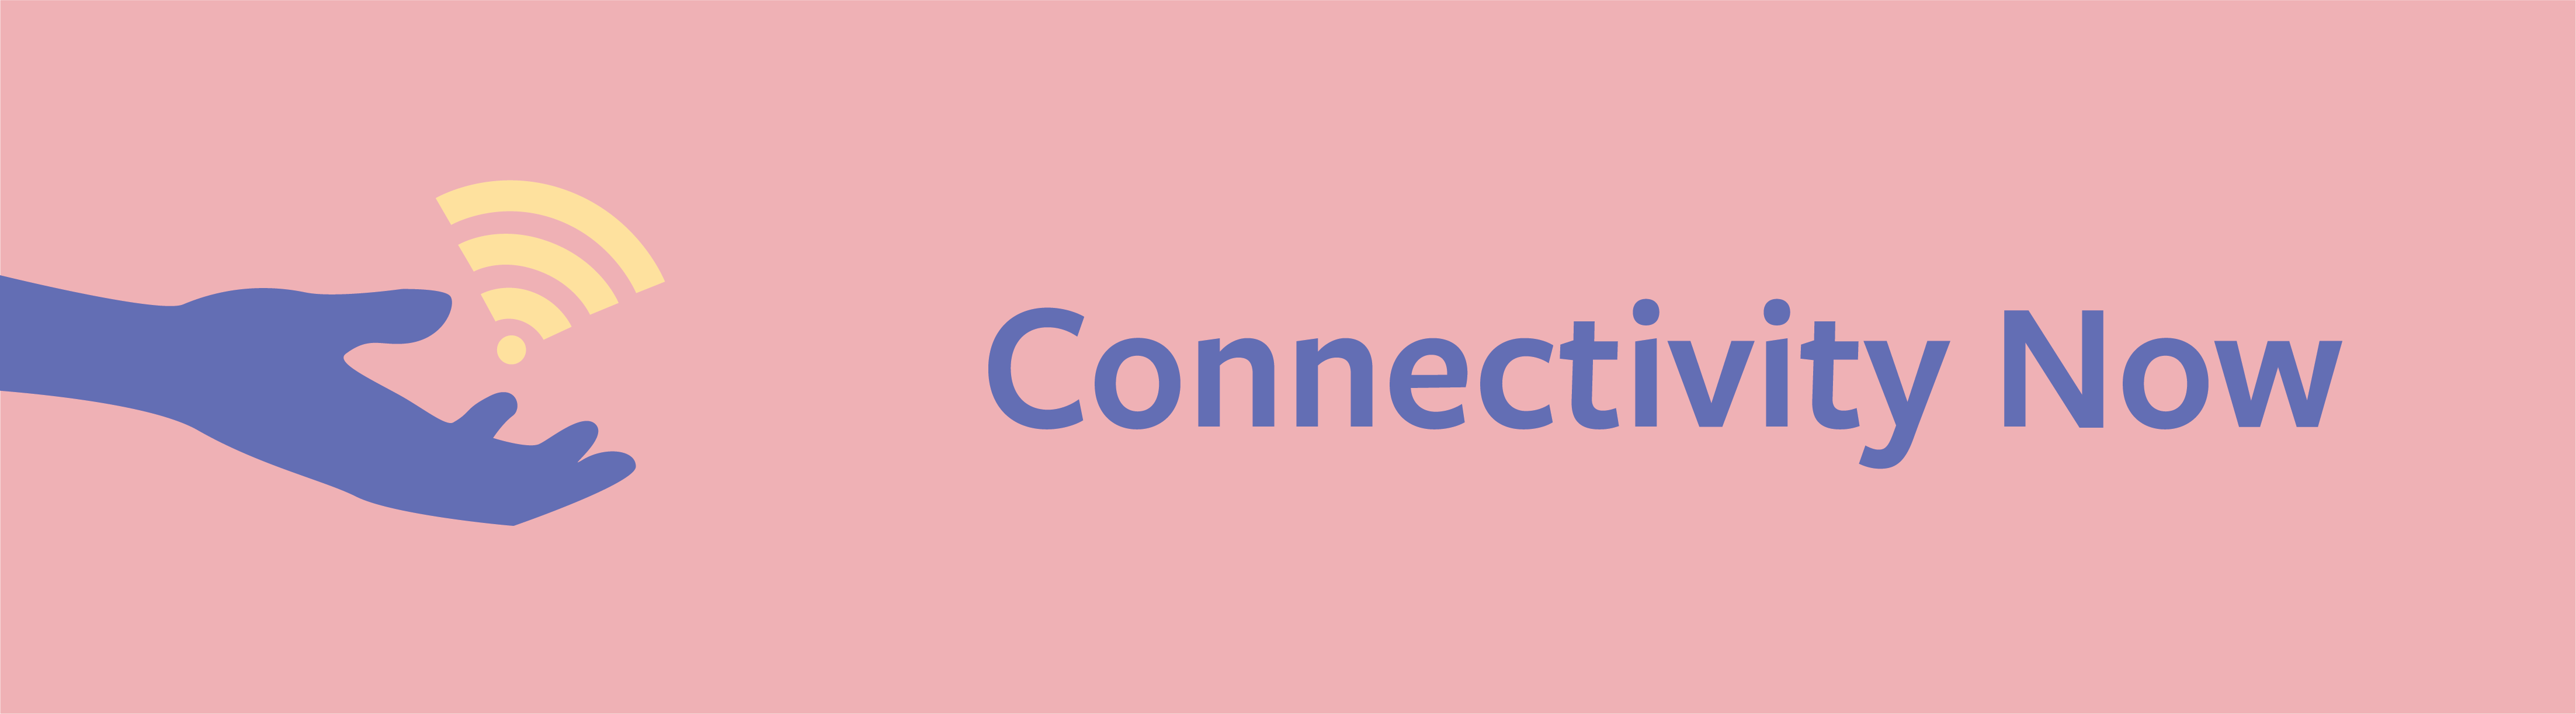 <h1>Connectivity Now</h1>